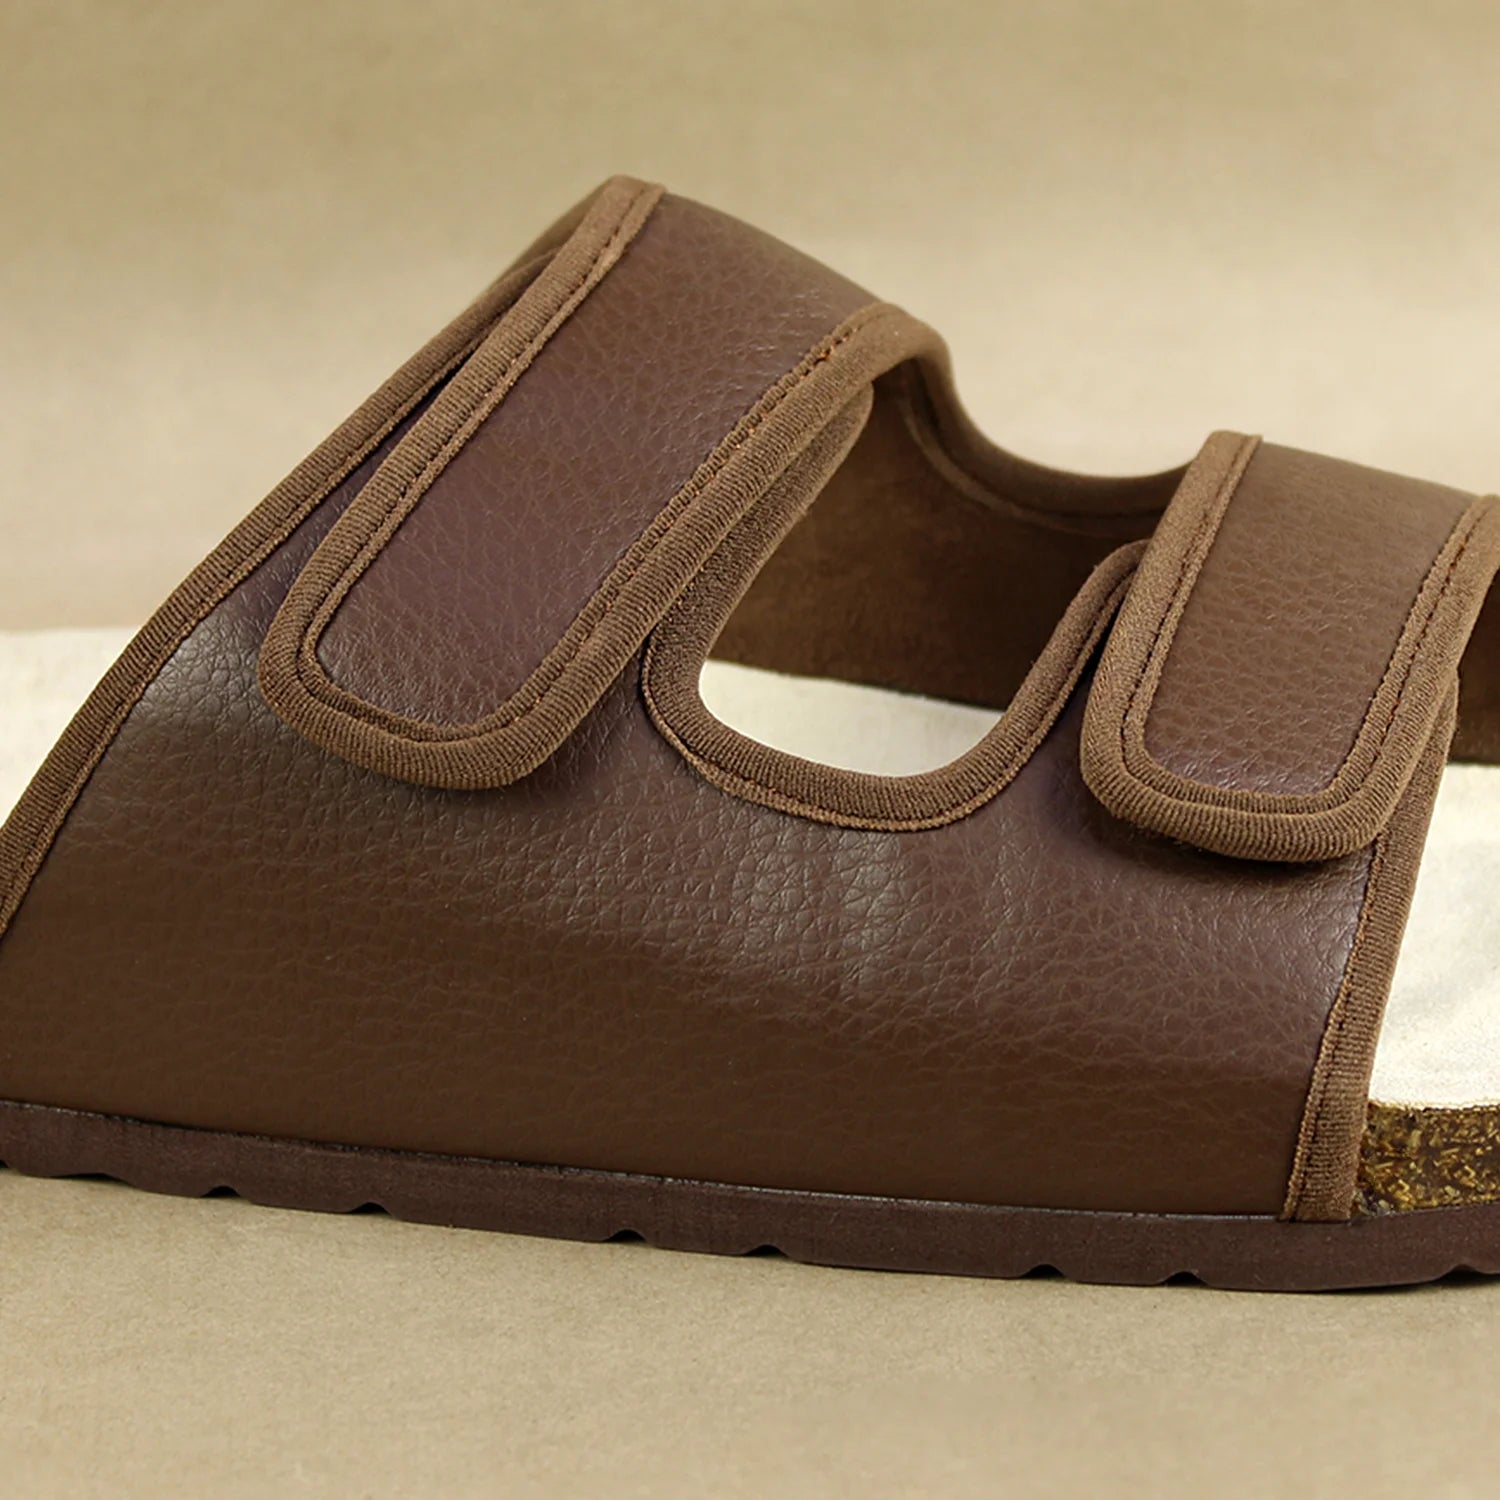 Men's Sandals in Cookie Brown: Comfortable and Adjustable Cork Footwear